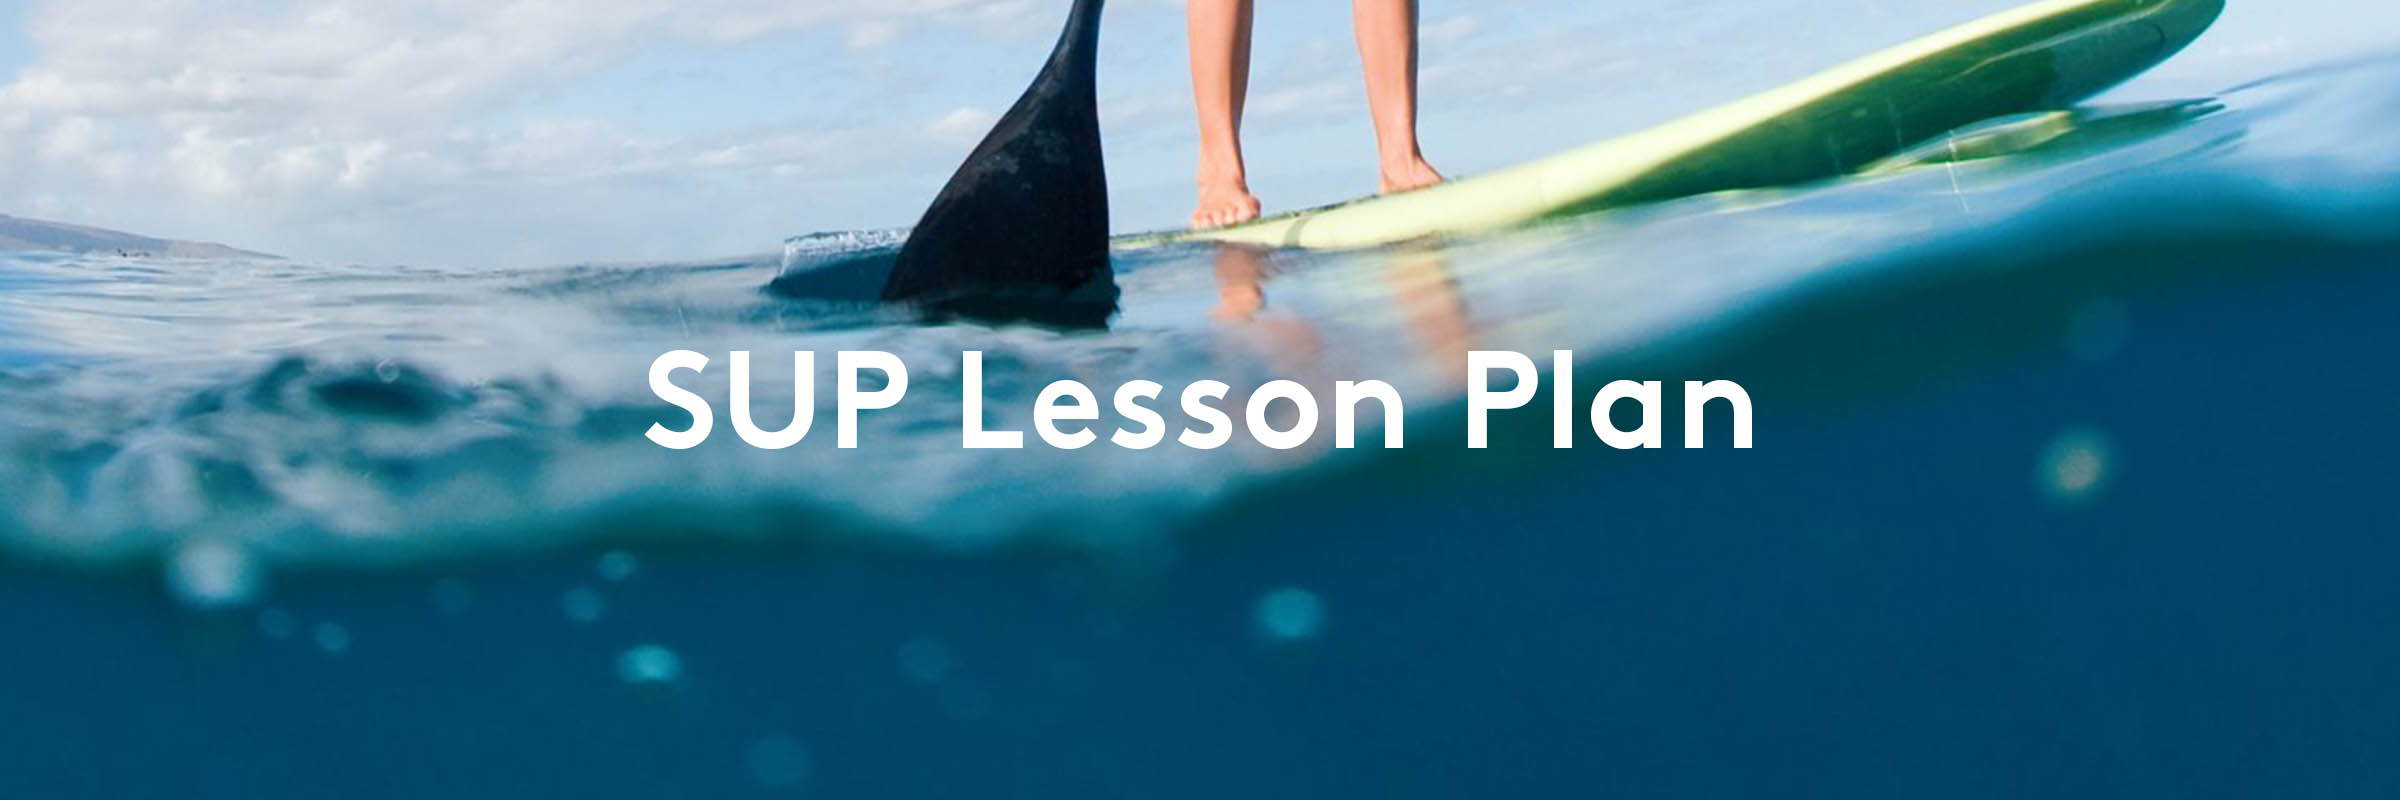 Stand up paddle boarding lesson la jolla, california